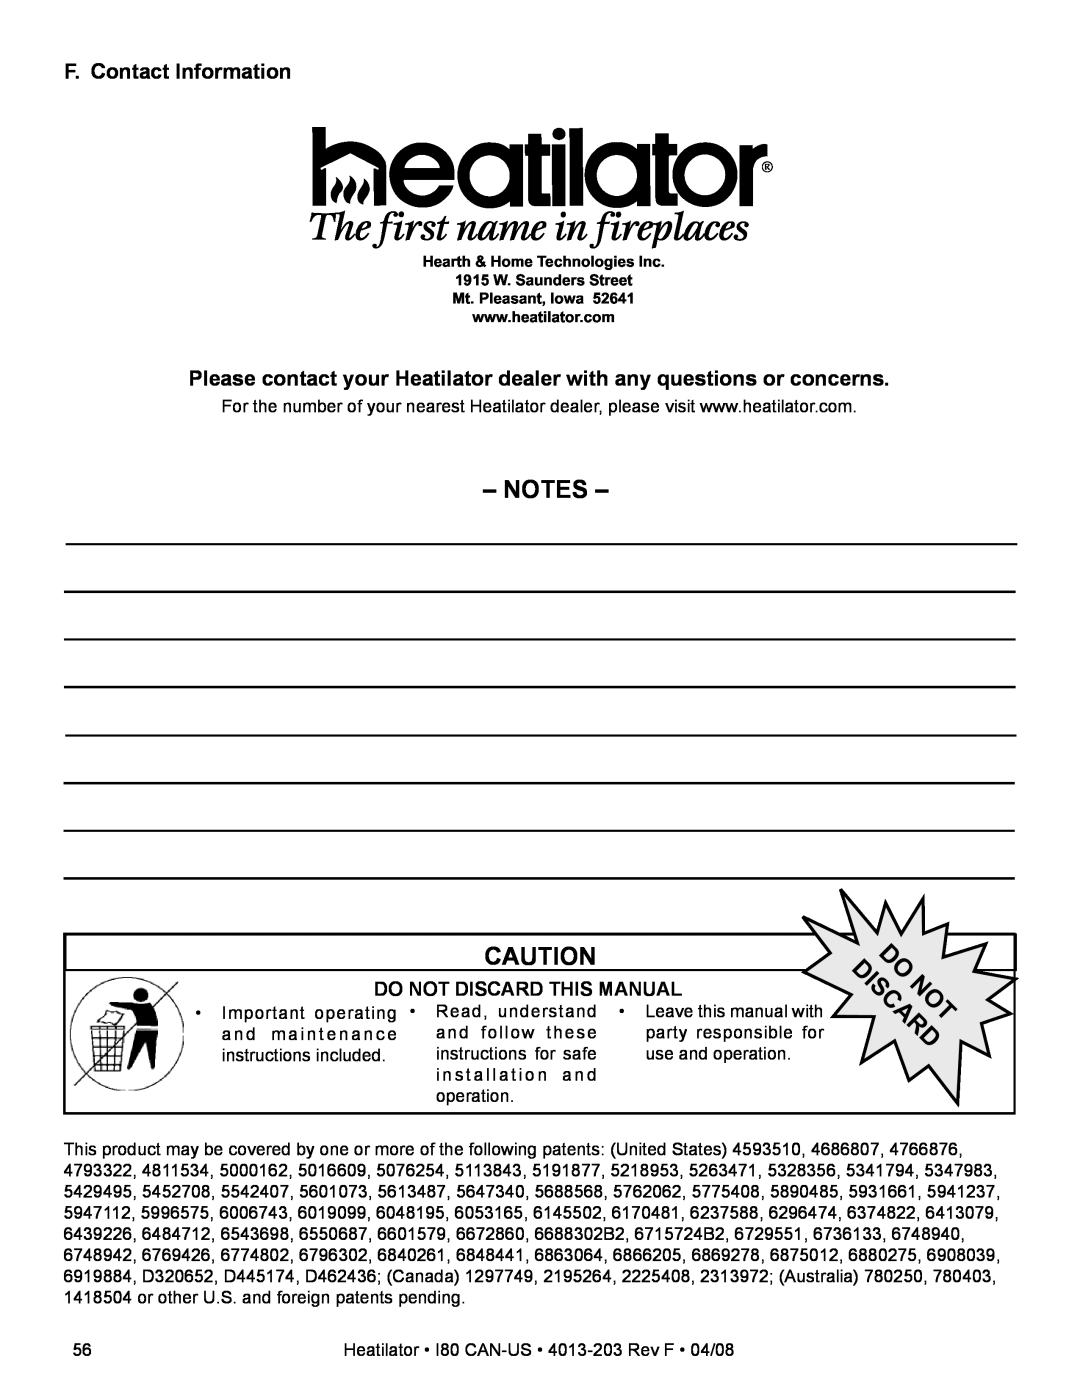 Heatiator I80 owner manual F. Contact Information, Do Discardnot 